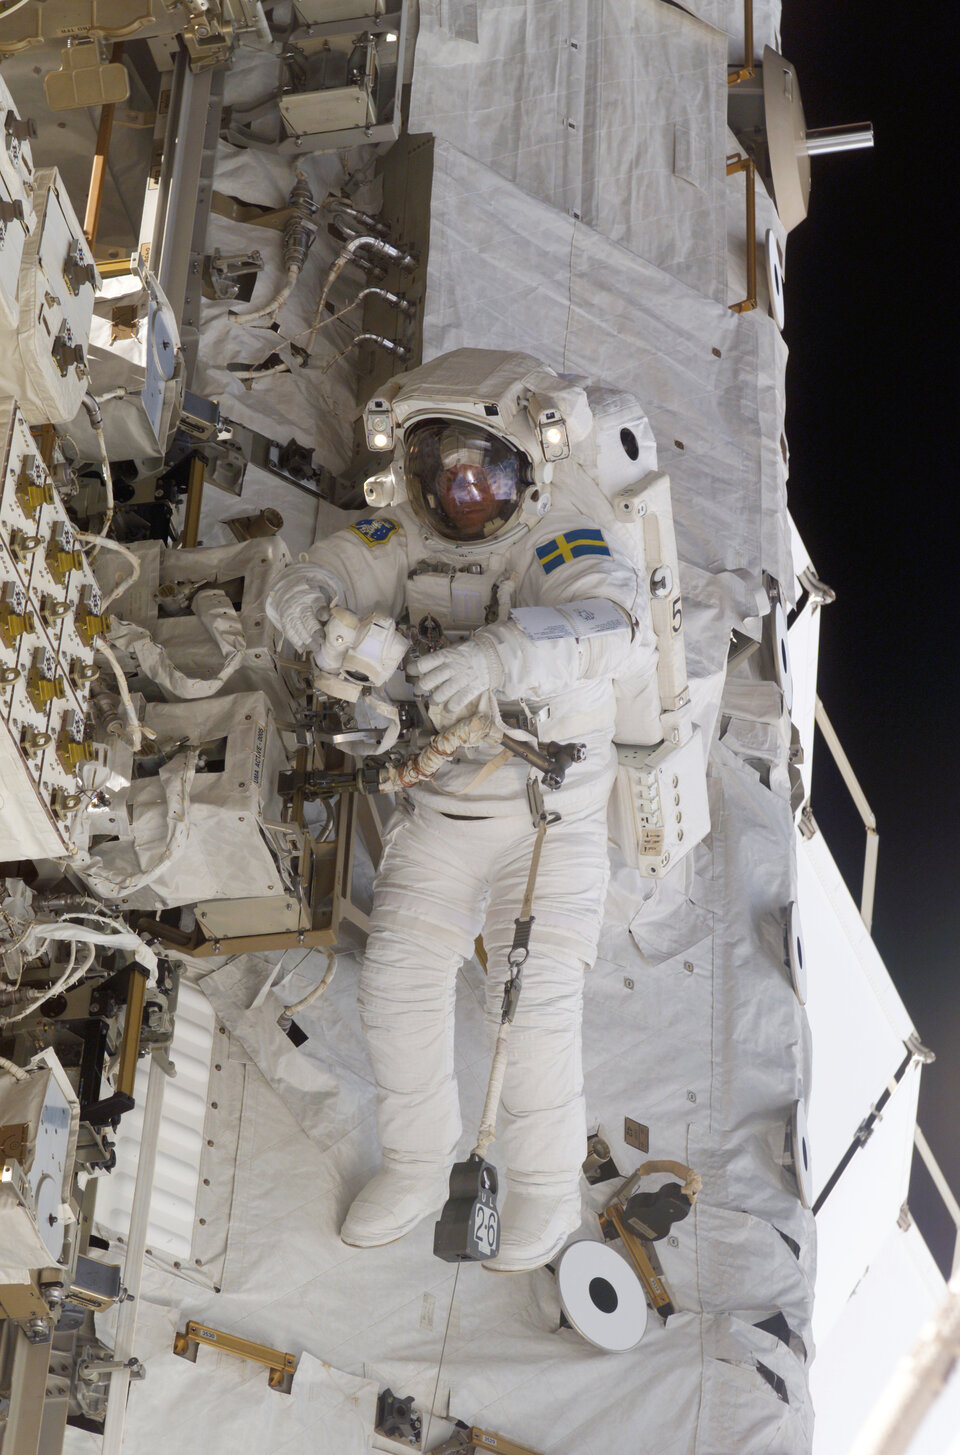 Christer Fuglesang takes part in his third spacewalk